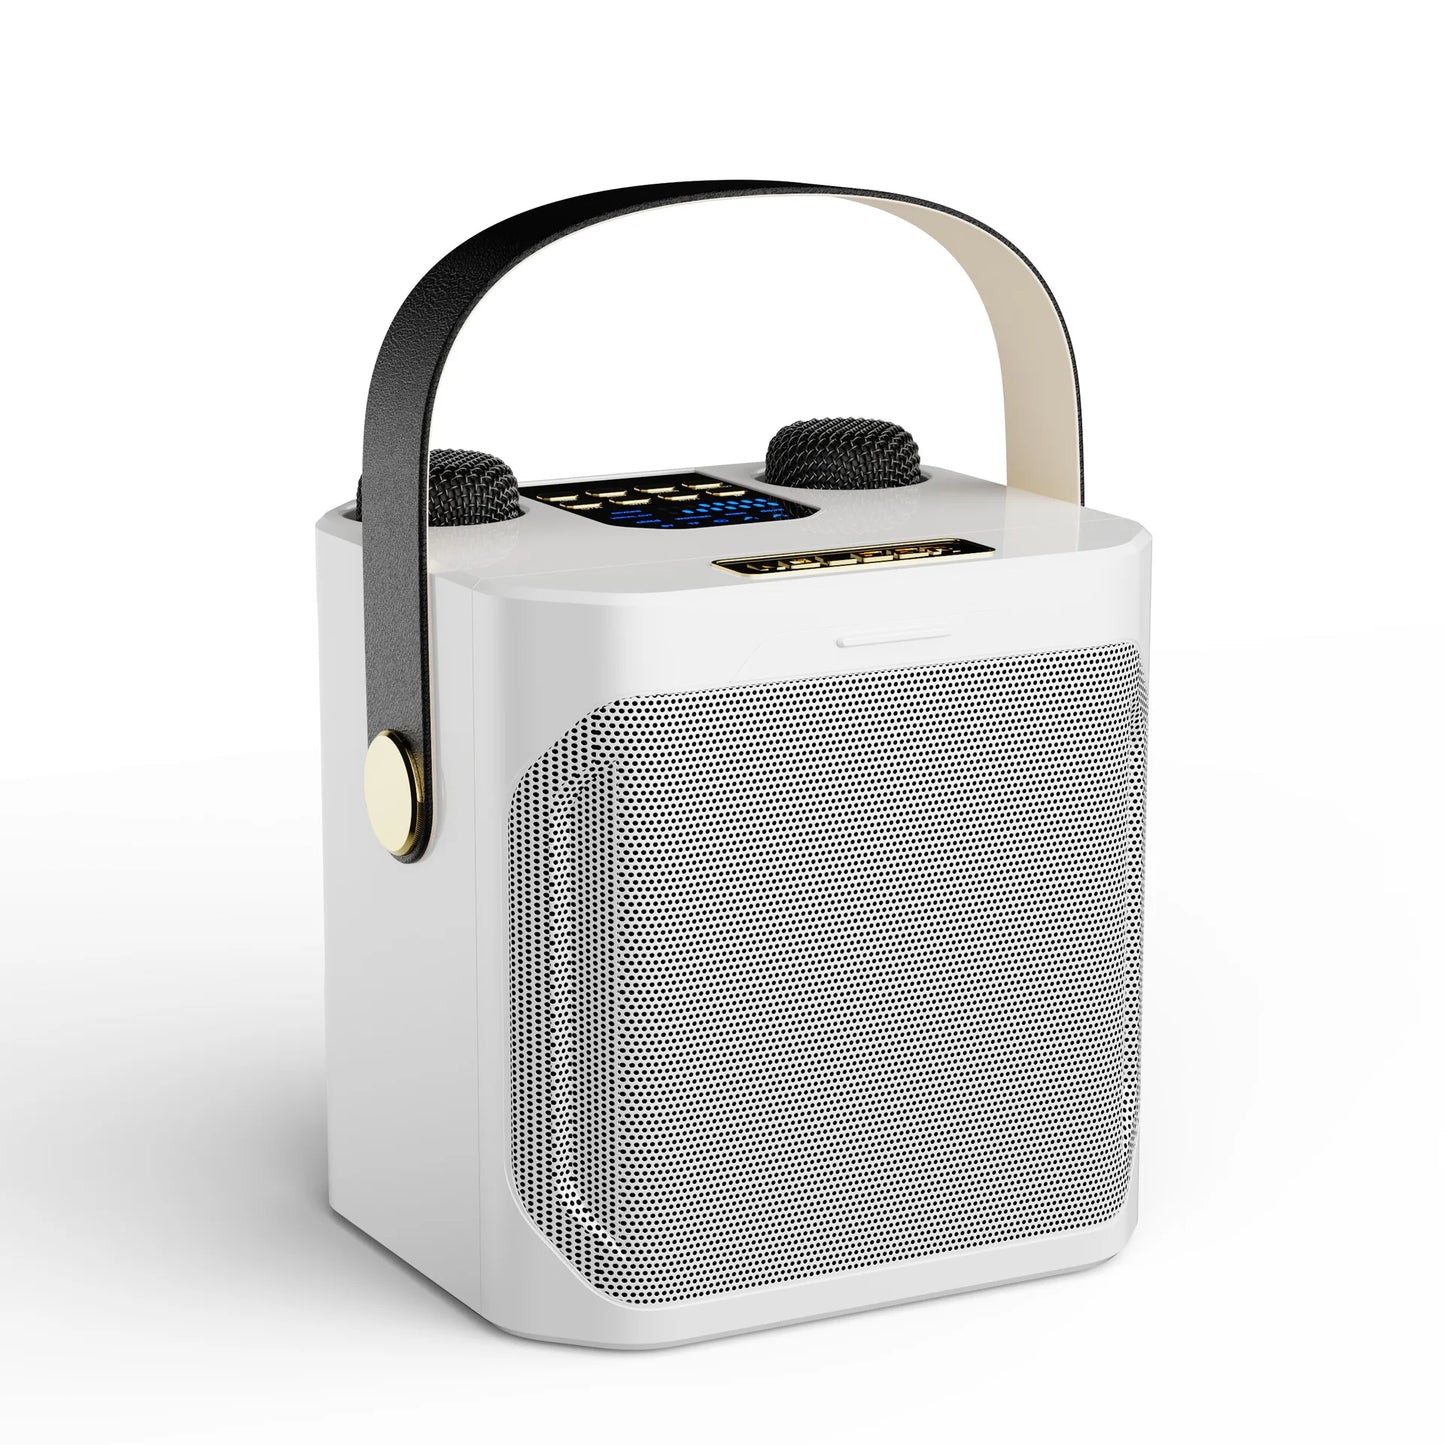 Altavoz Bluetooth de alta potencia para Karaoke, Subwoofer Inalámbrico envolvente estéreo 360 portátil, resistente al agua, con Boombox de micrófono Dual